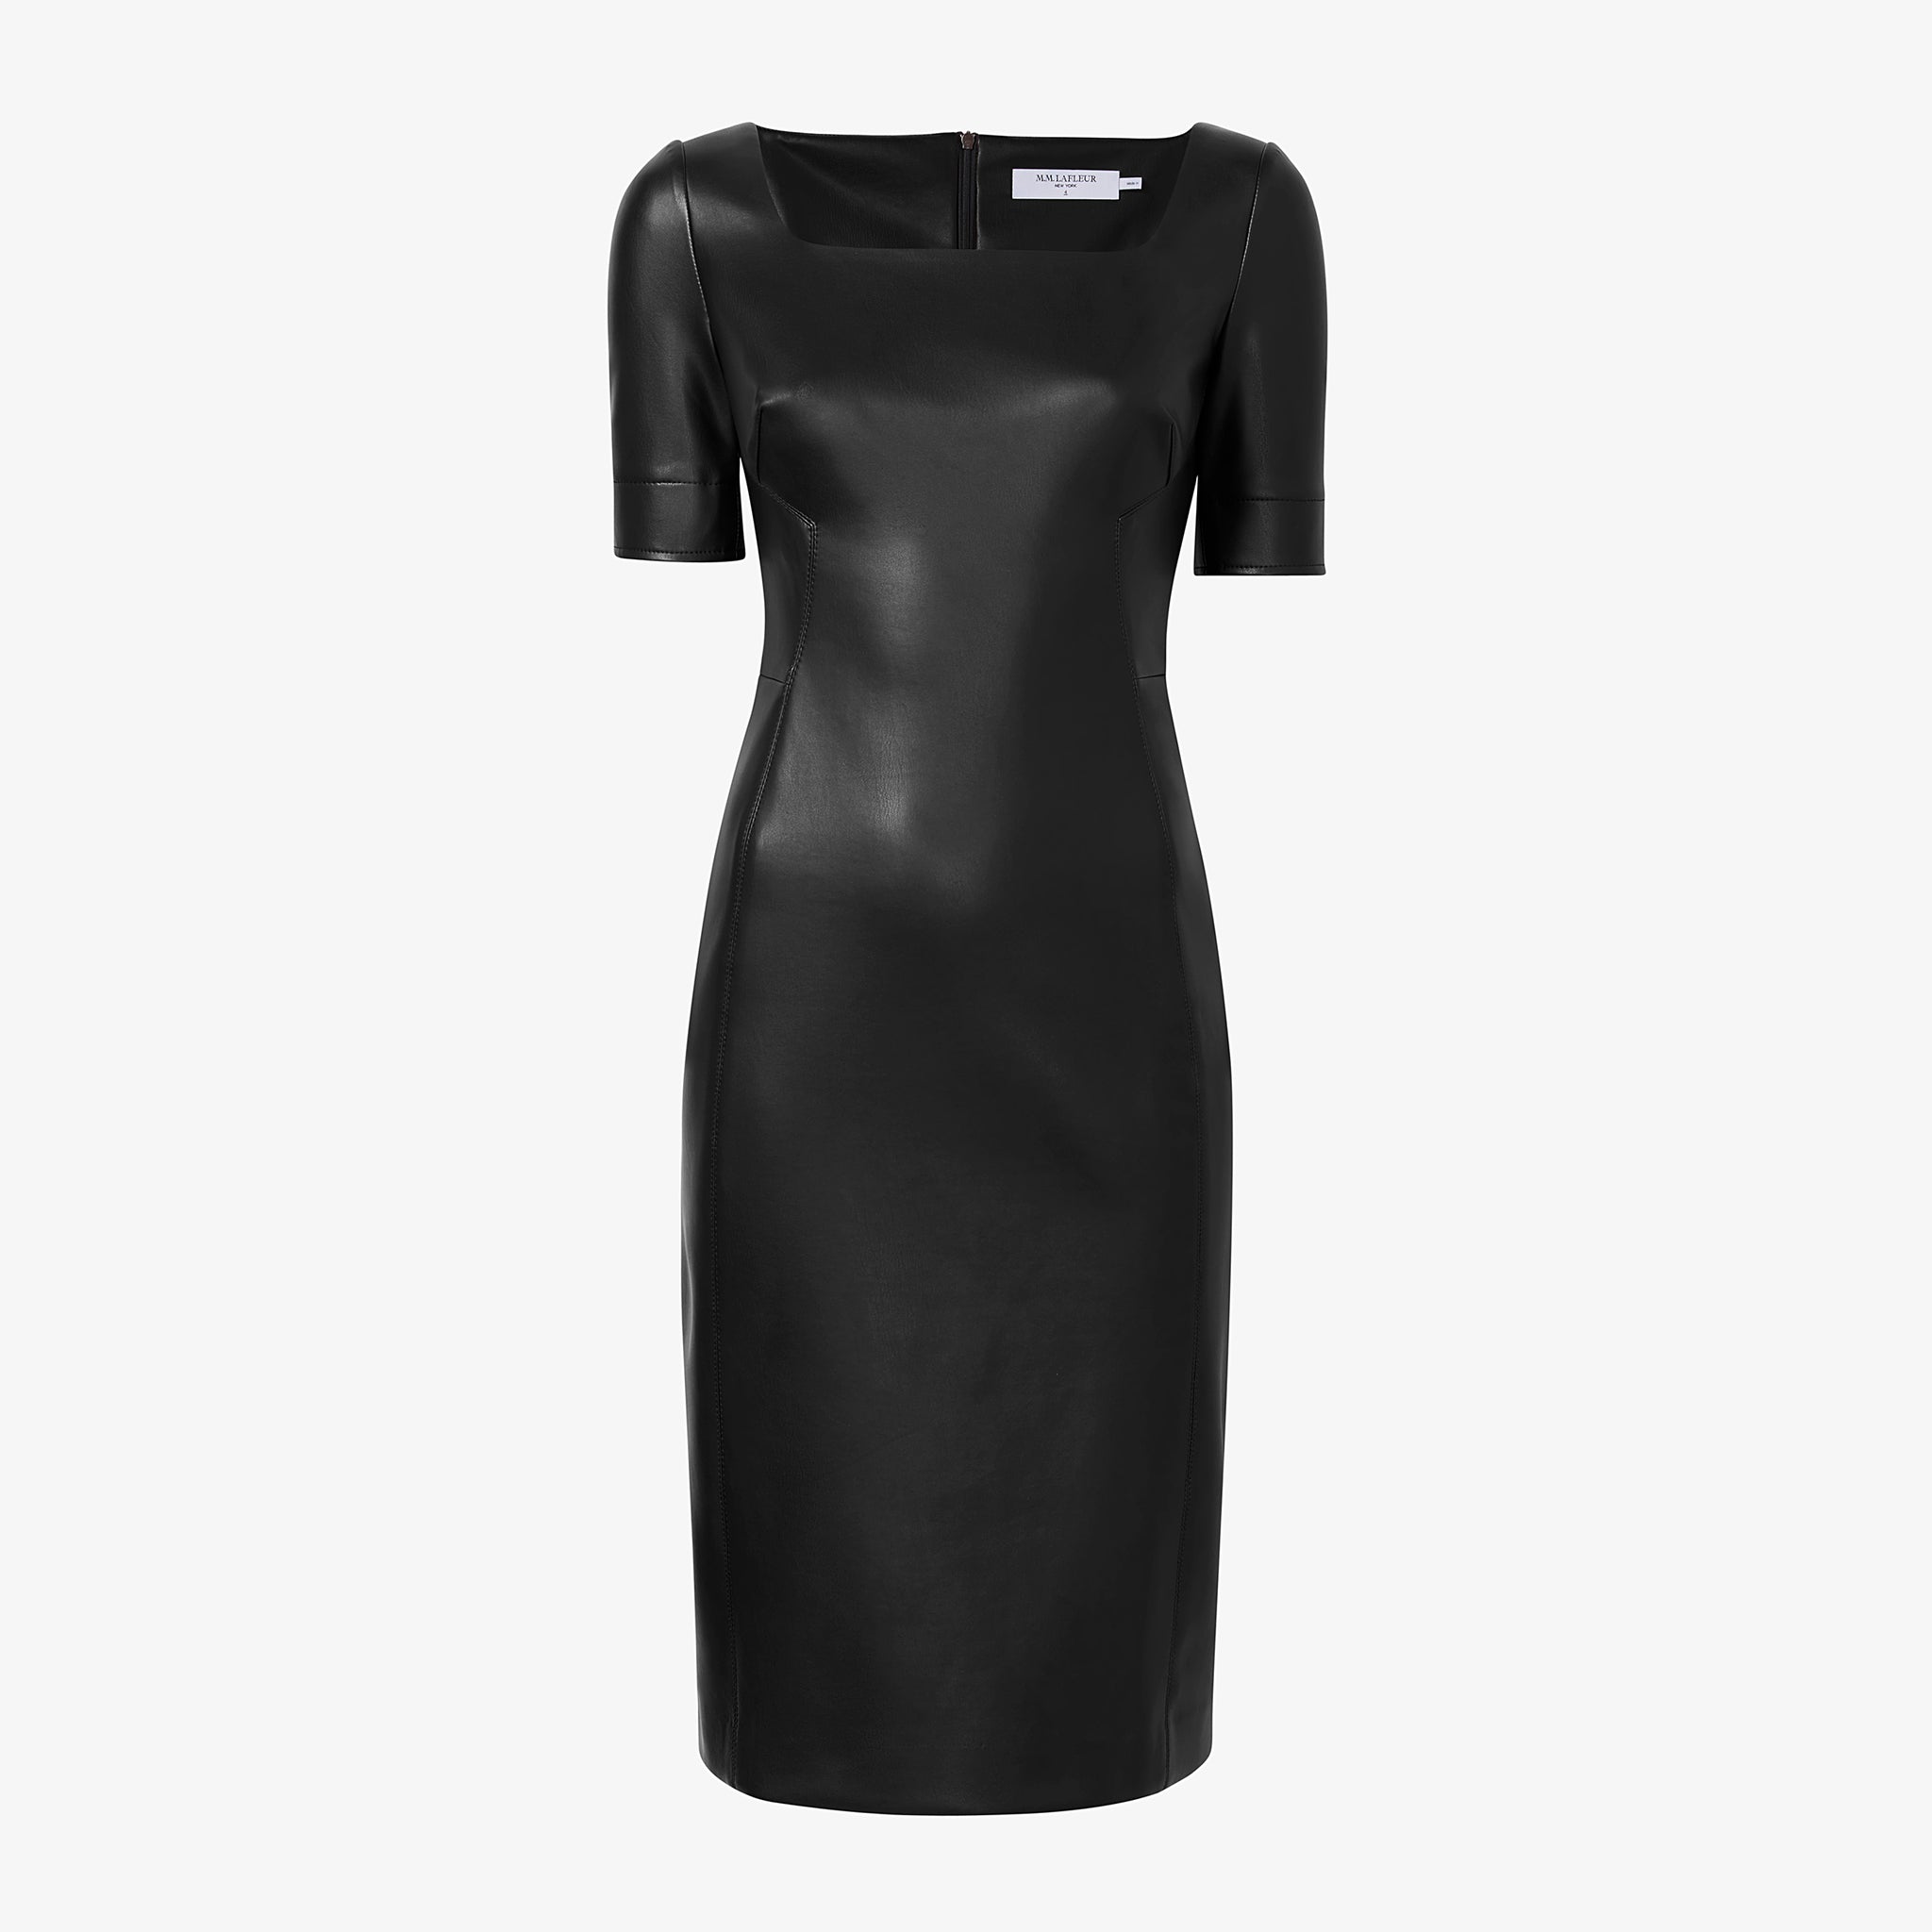 Packshot image of the noa dress in black